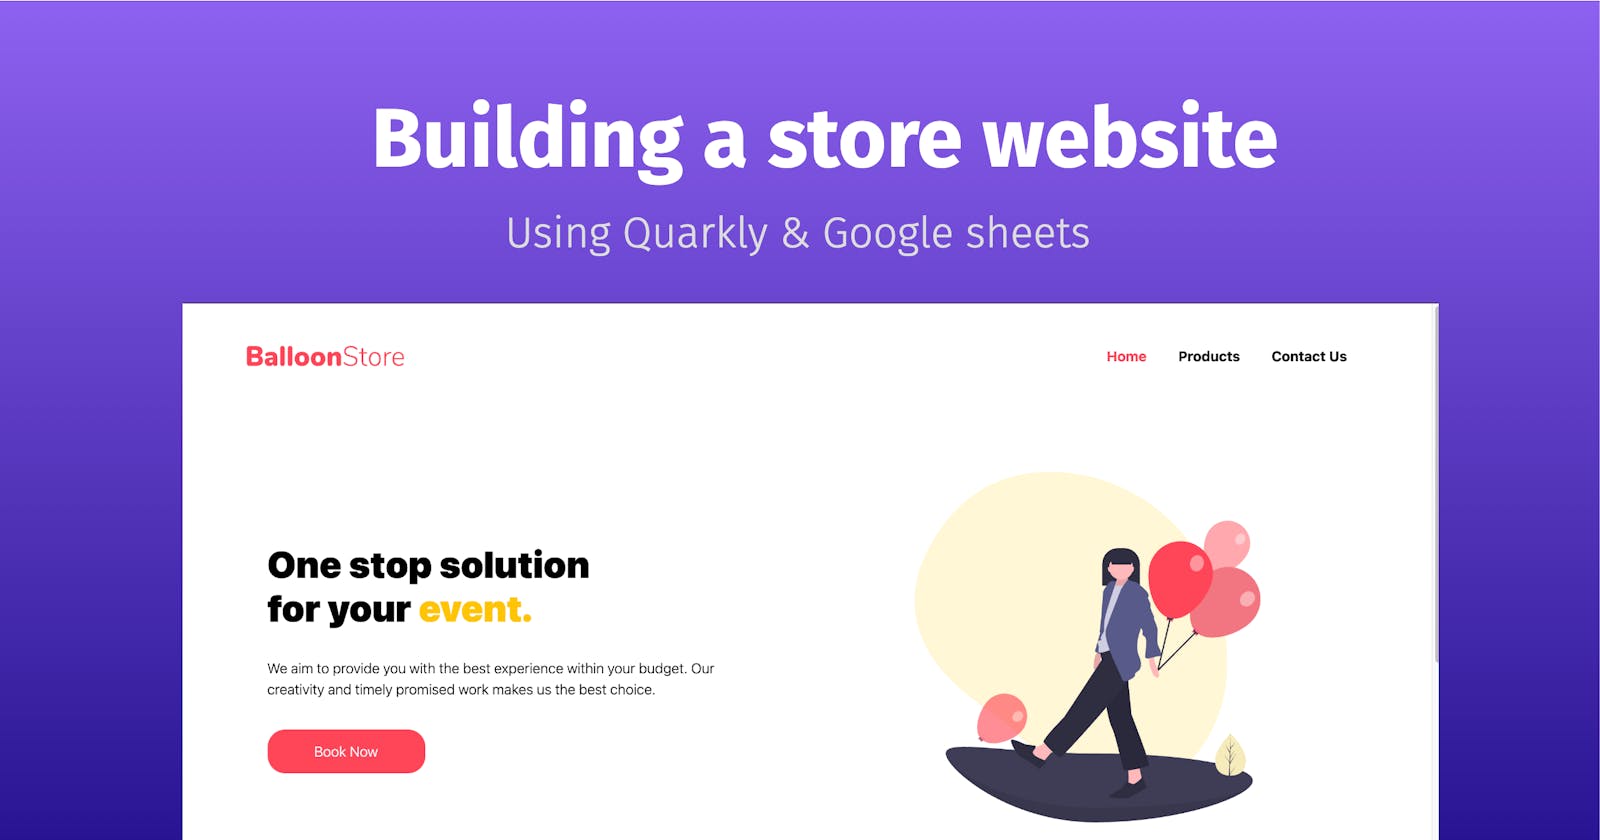 Building a store website